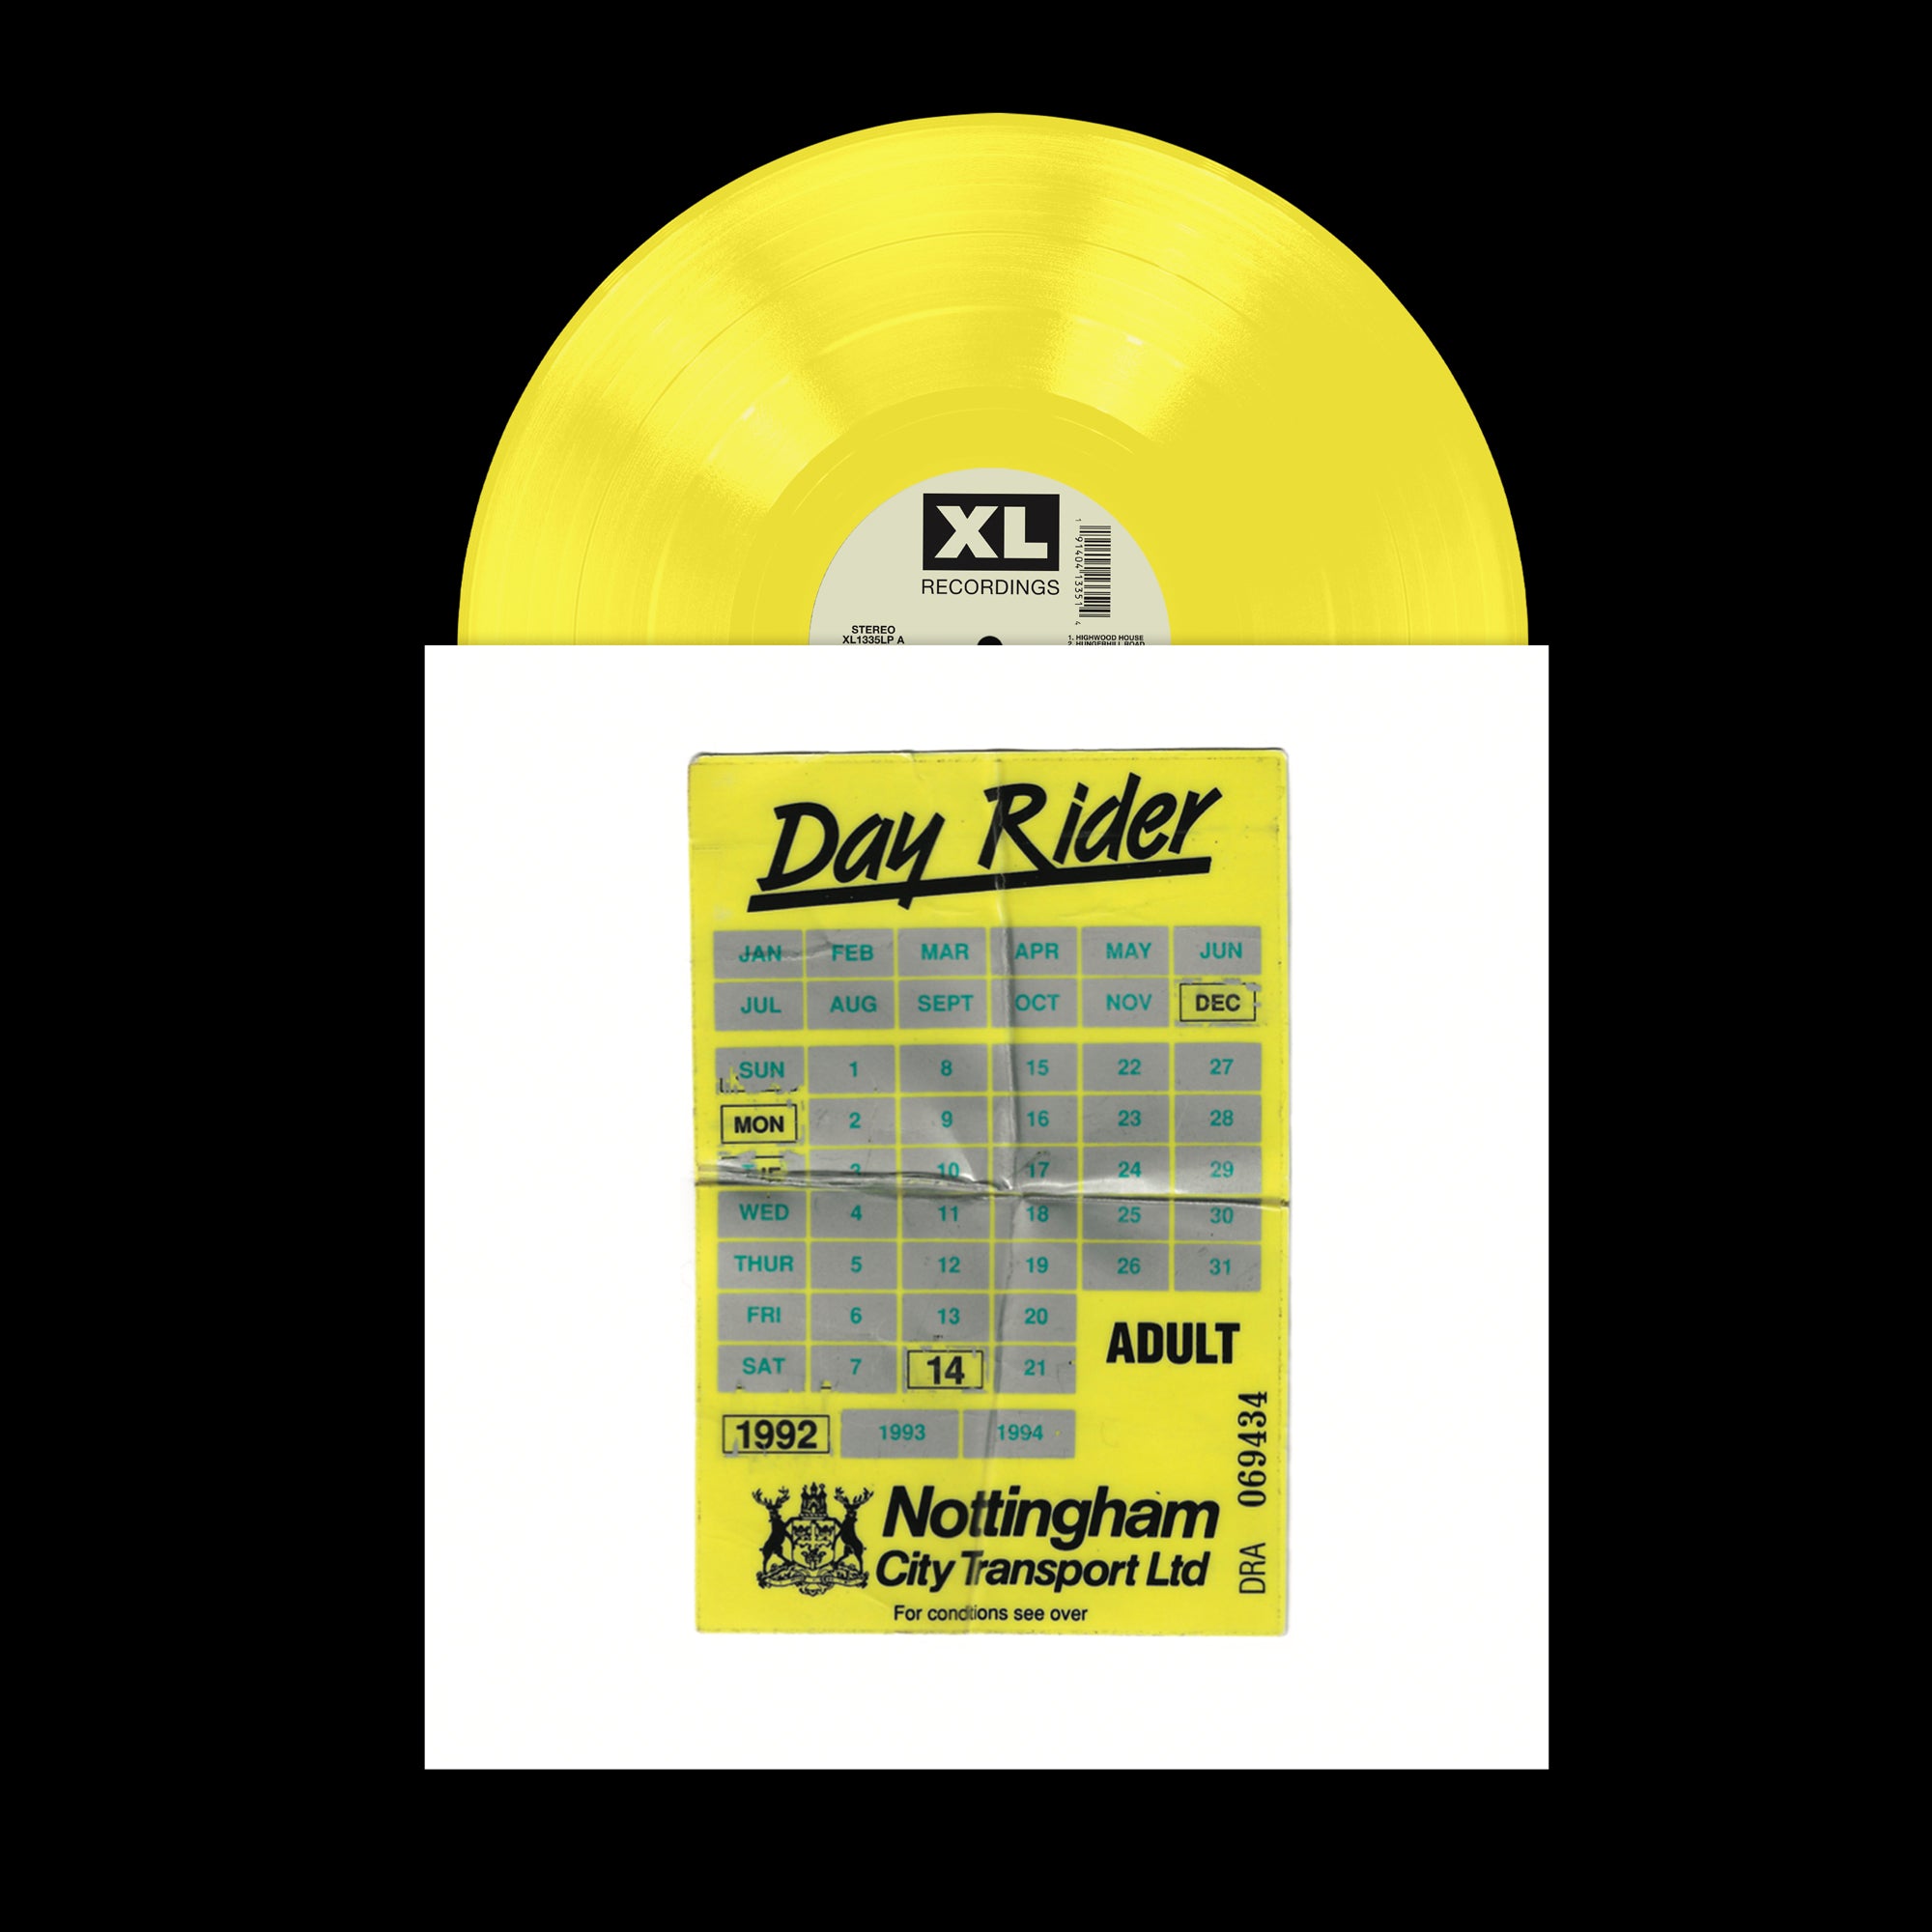 SAM MORTON - Daffodils & Dirt: Limited Yellow Vinyl LP